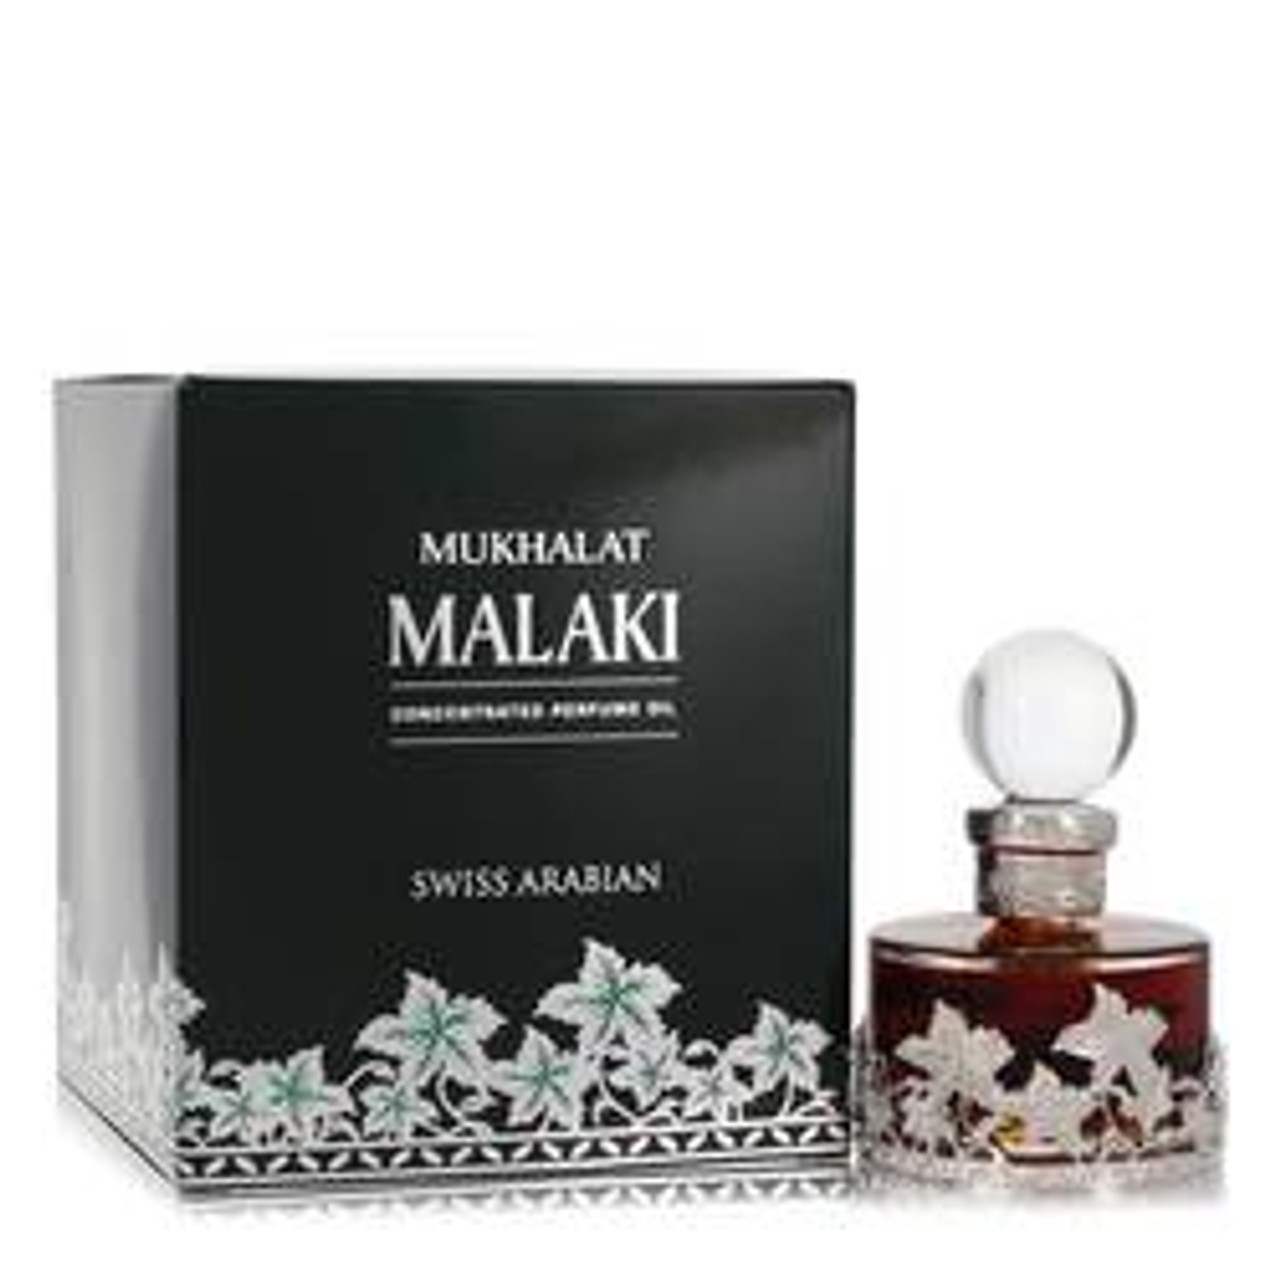 Swiss Arabian Mukhalat Malaki Cologne By Swiss Arabian Concentrated Perfume Oil 1 oz for Men - *Pre-Order